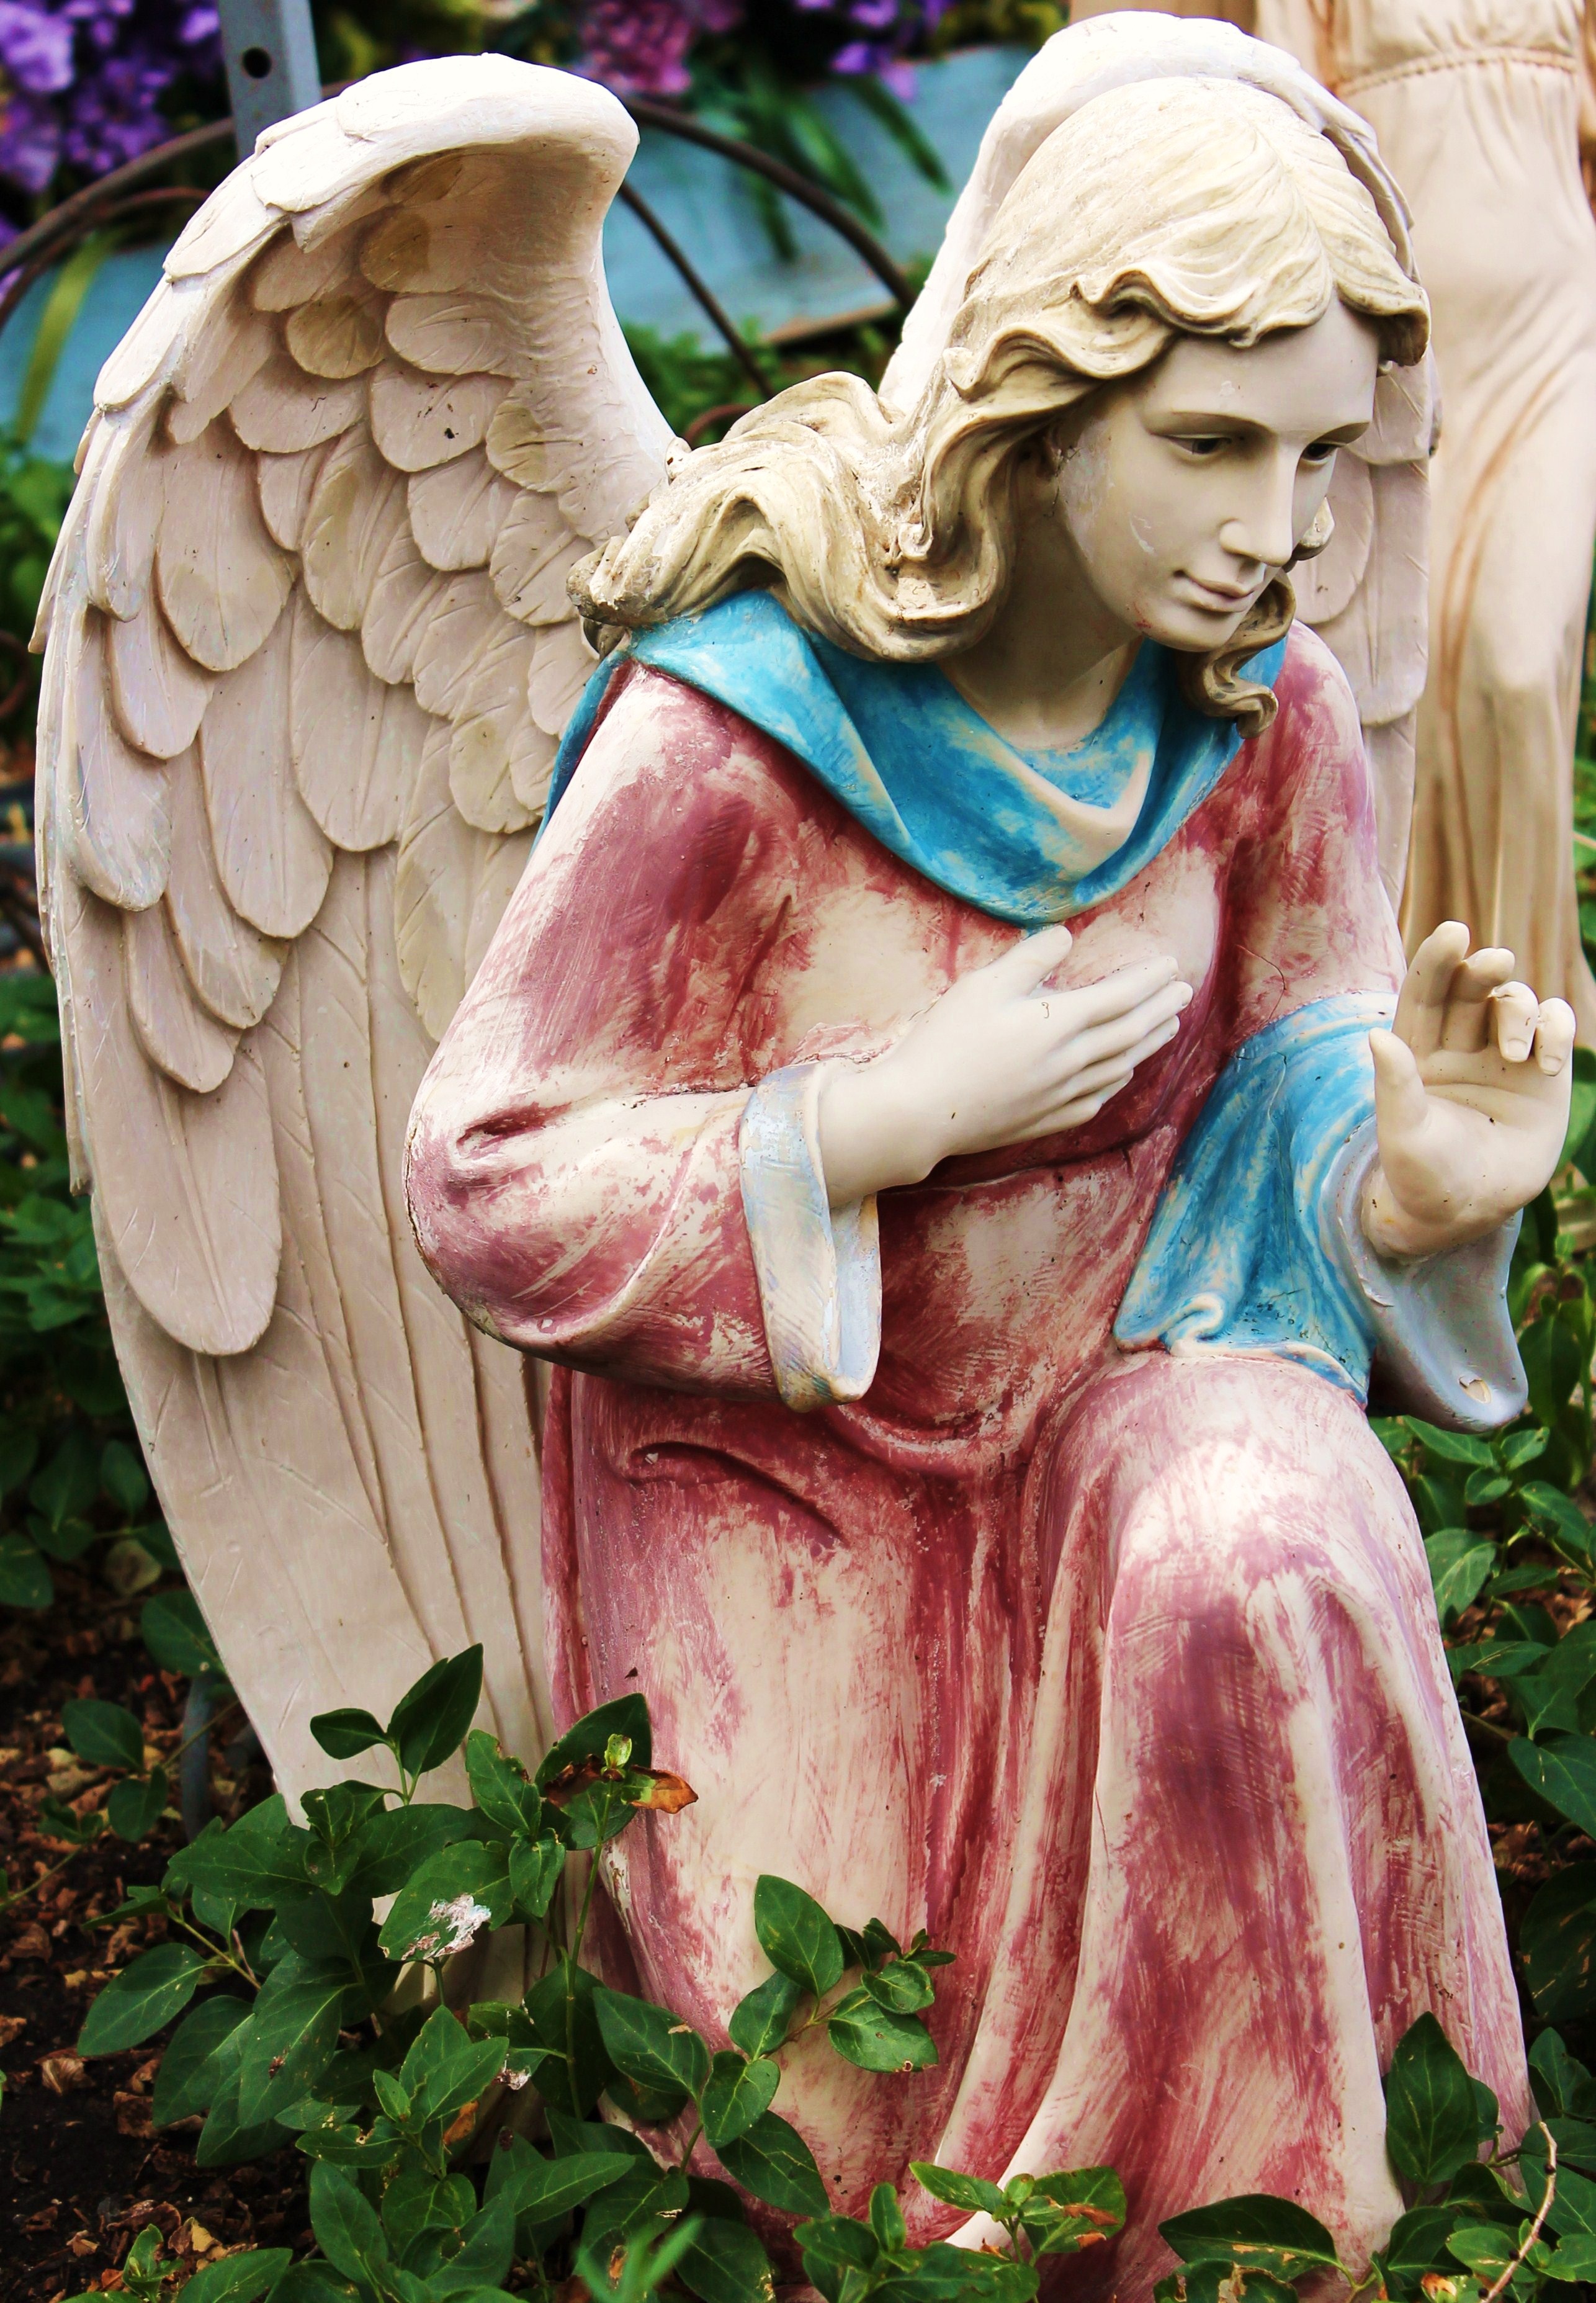 guardian angel statue, yard art, religion, garden sculpture, spiritual